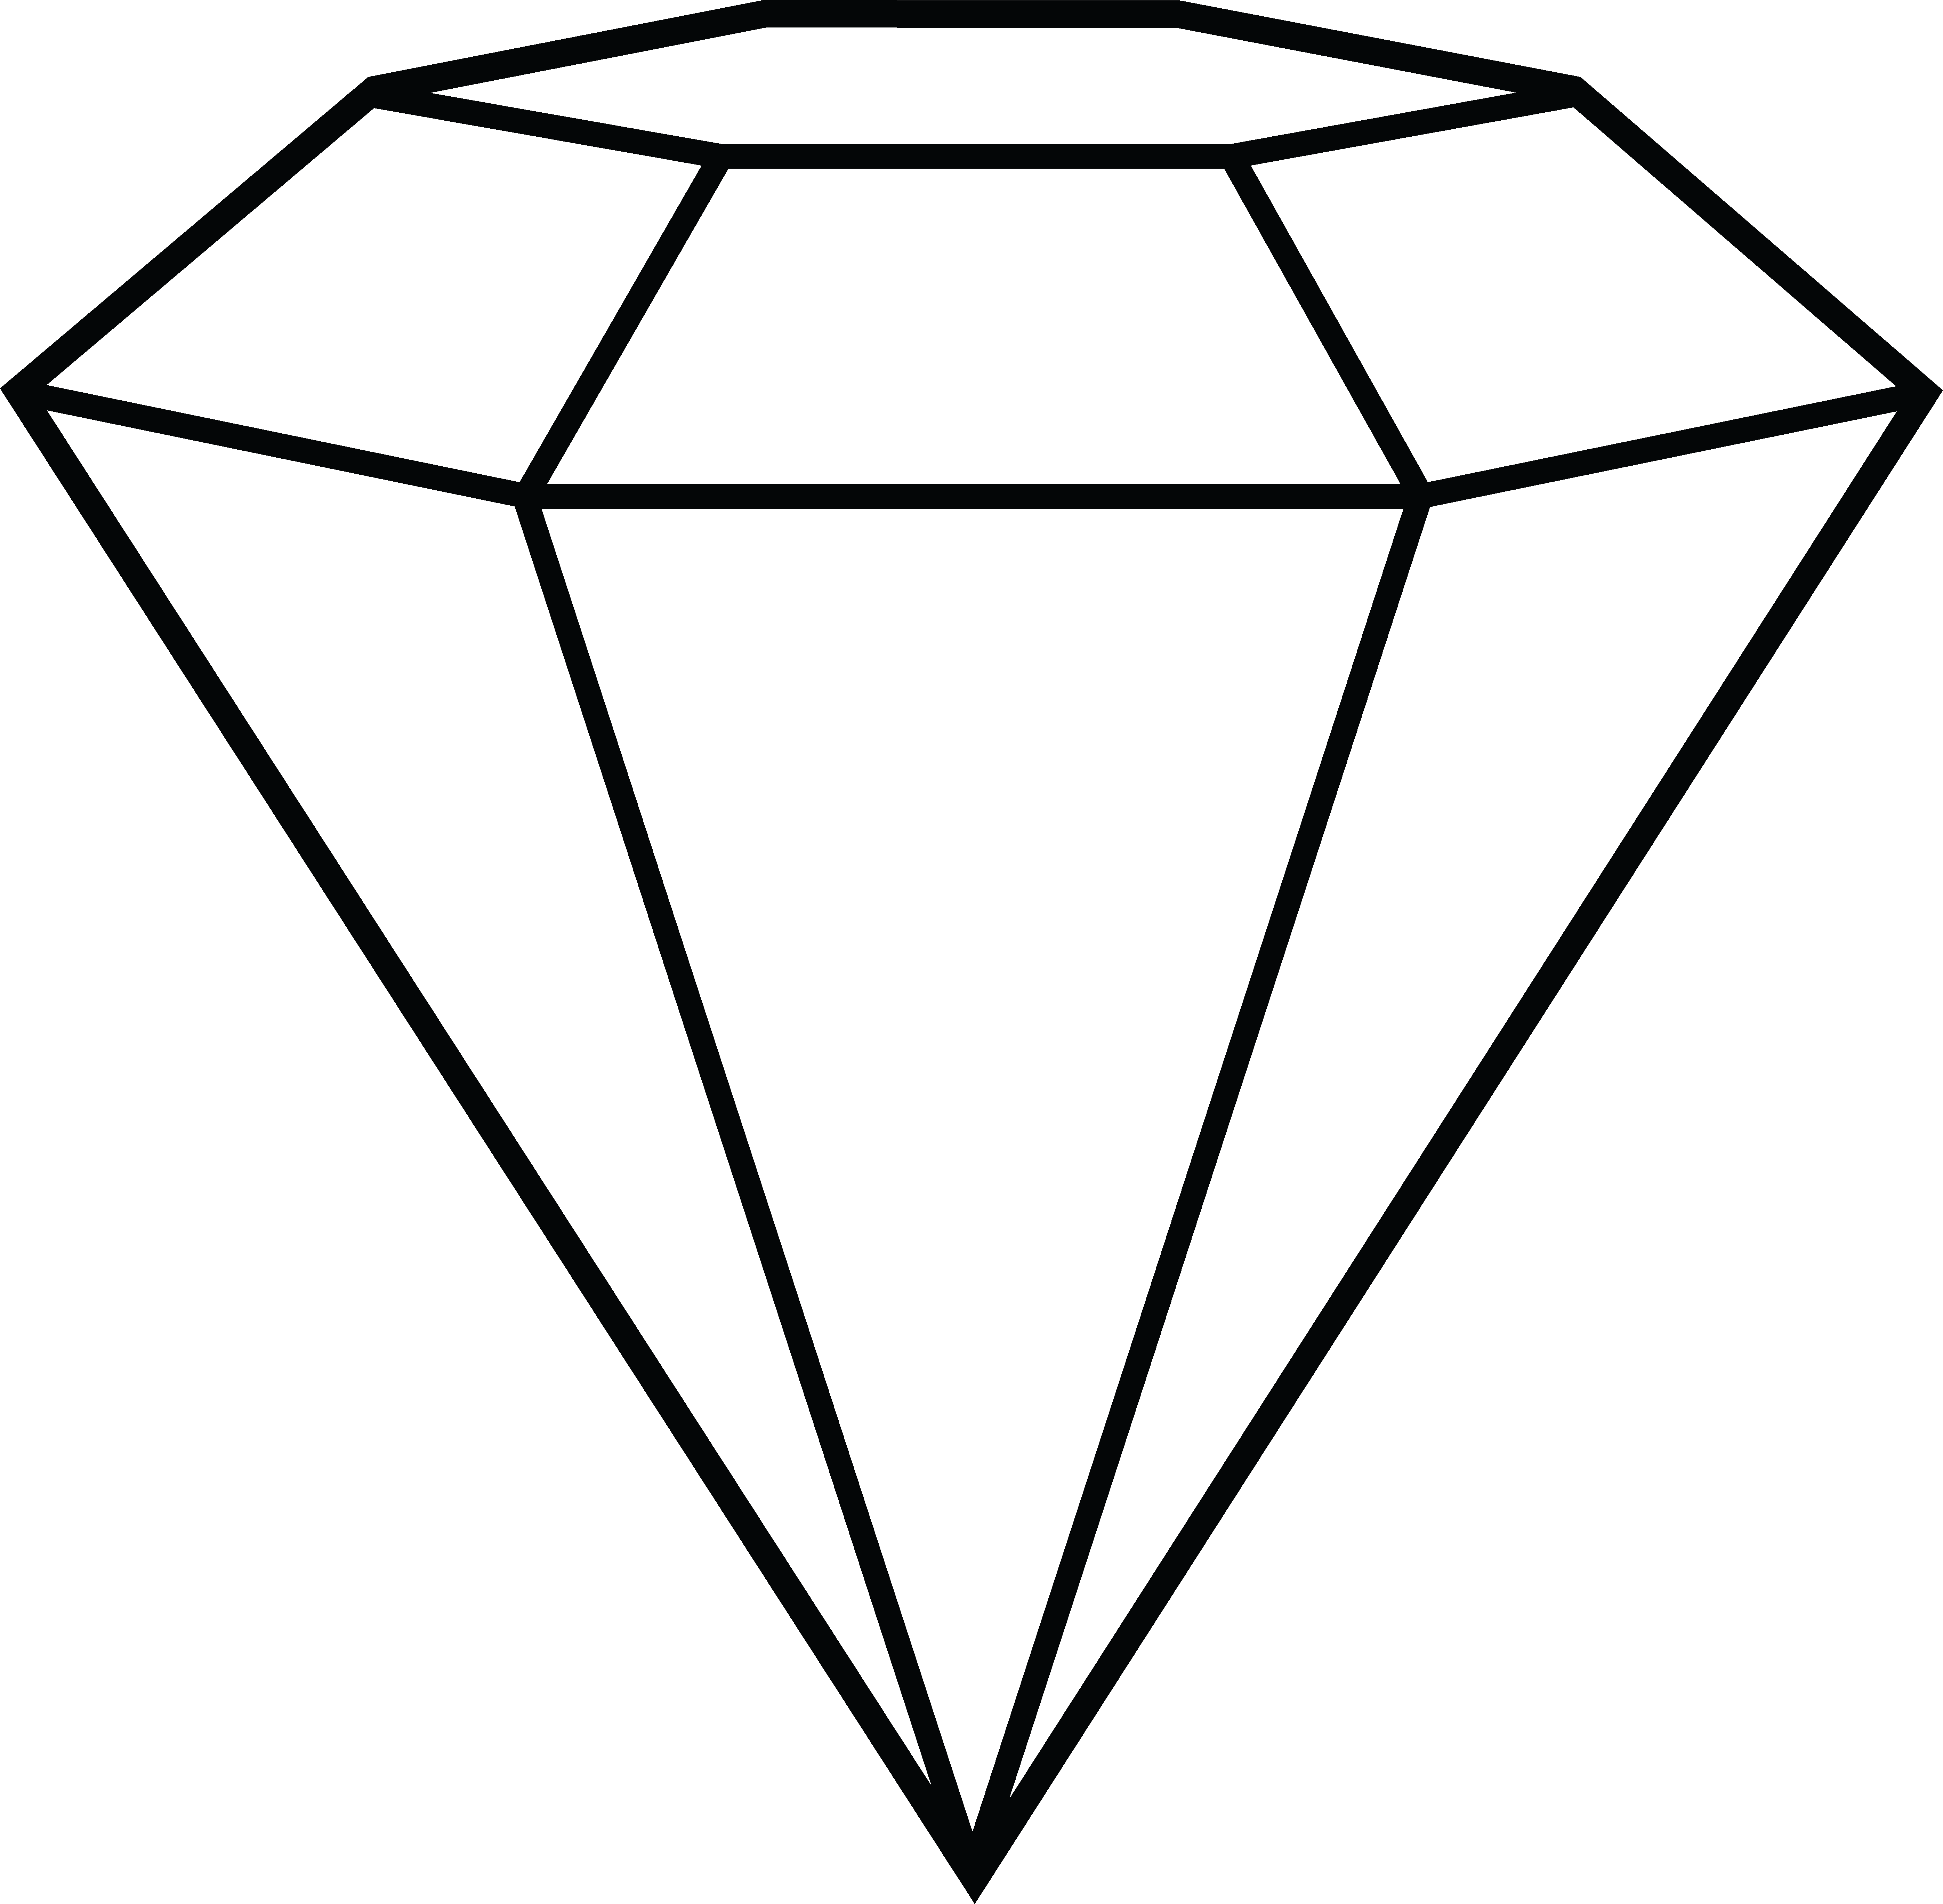 Green diamond clip art at vector clipartix